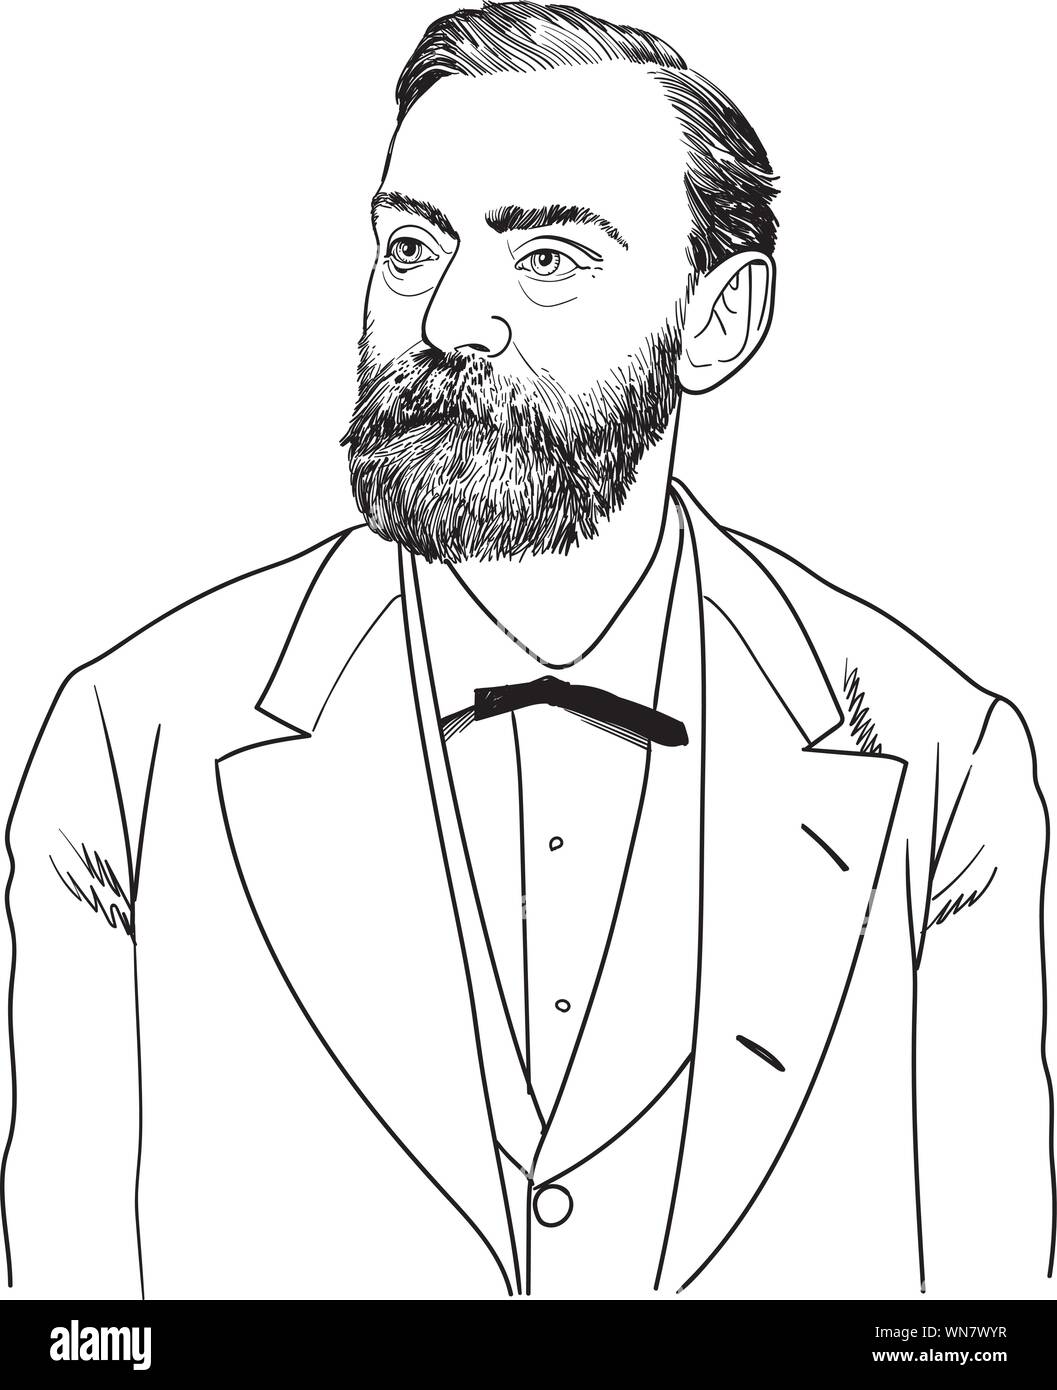 Alfred Bernhard Nobel line art portrait. He was a Swedish businessman, chemist, engineer, inventor, and philanthropist. Stock Vector